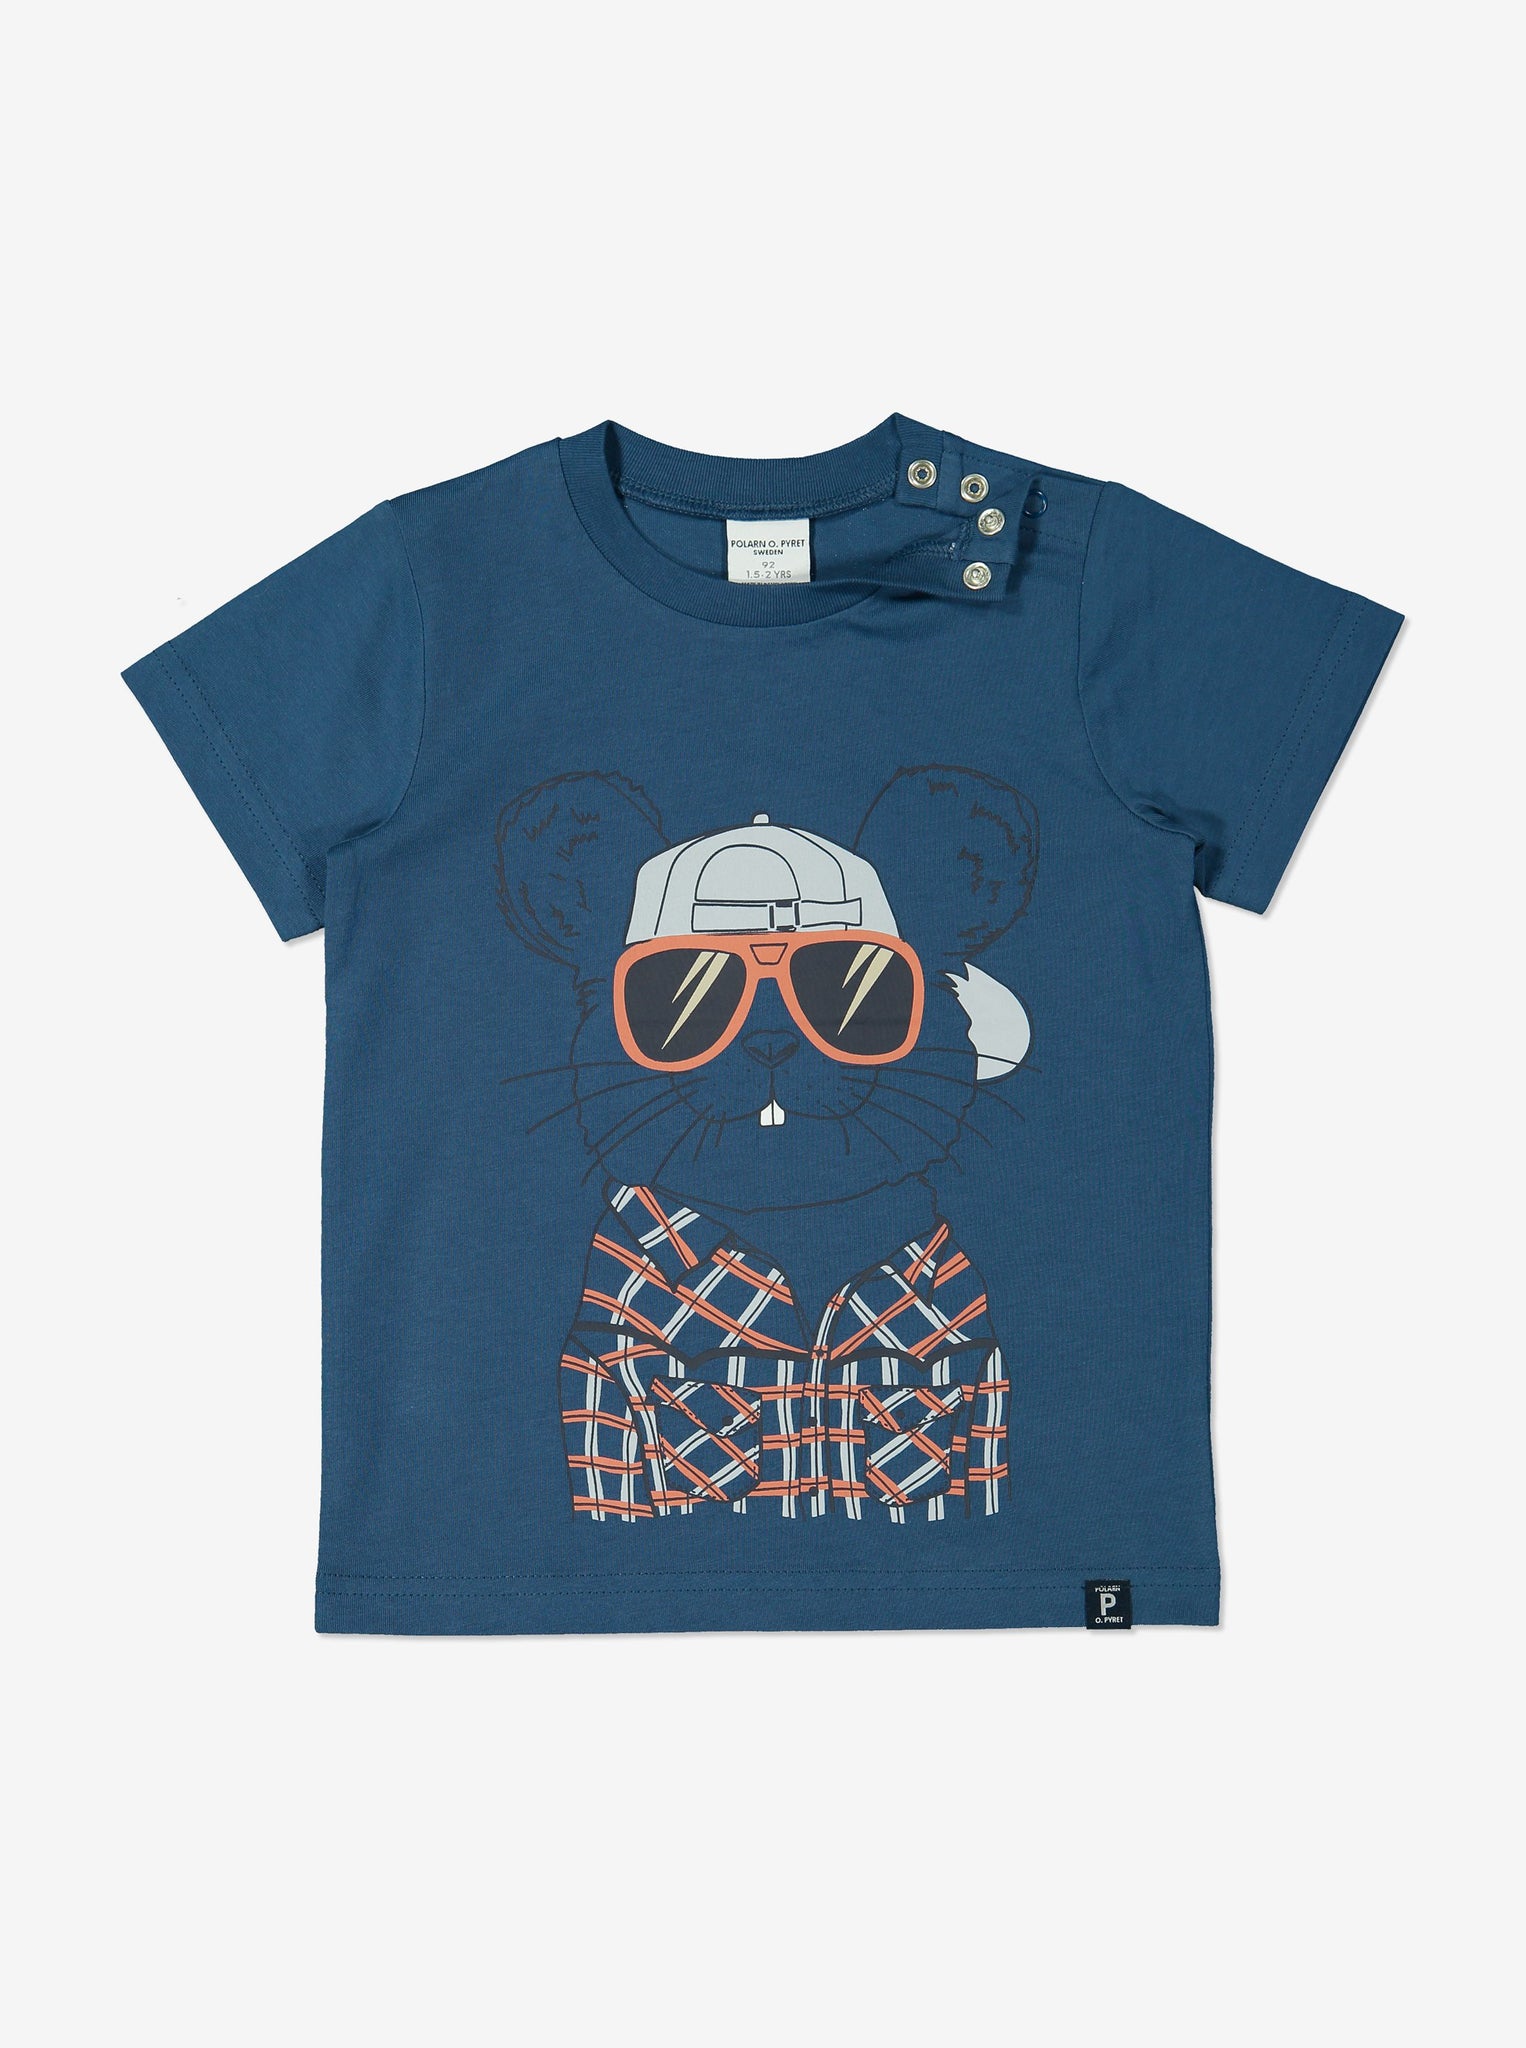 Unisex Blue Kids Organic T-Shirt